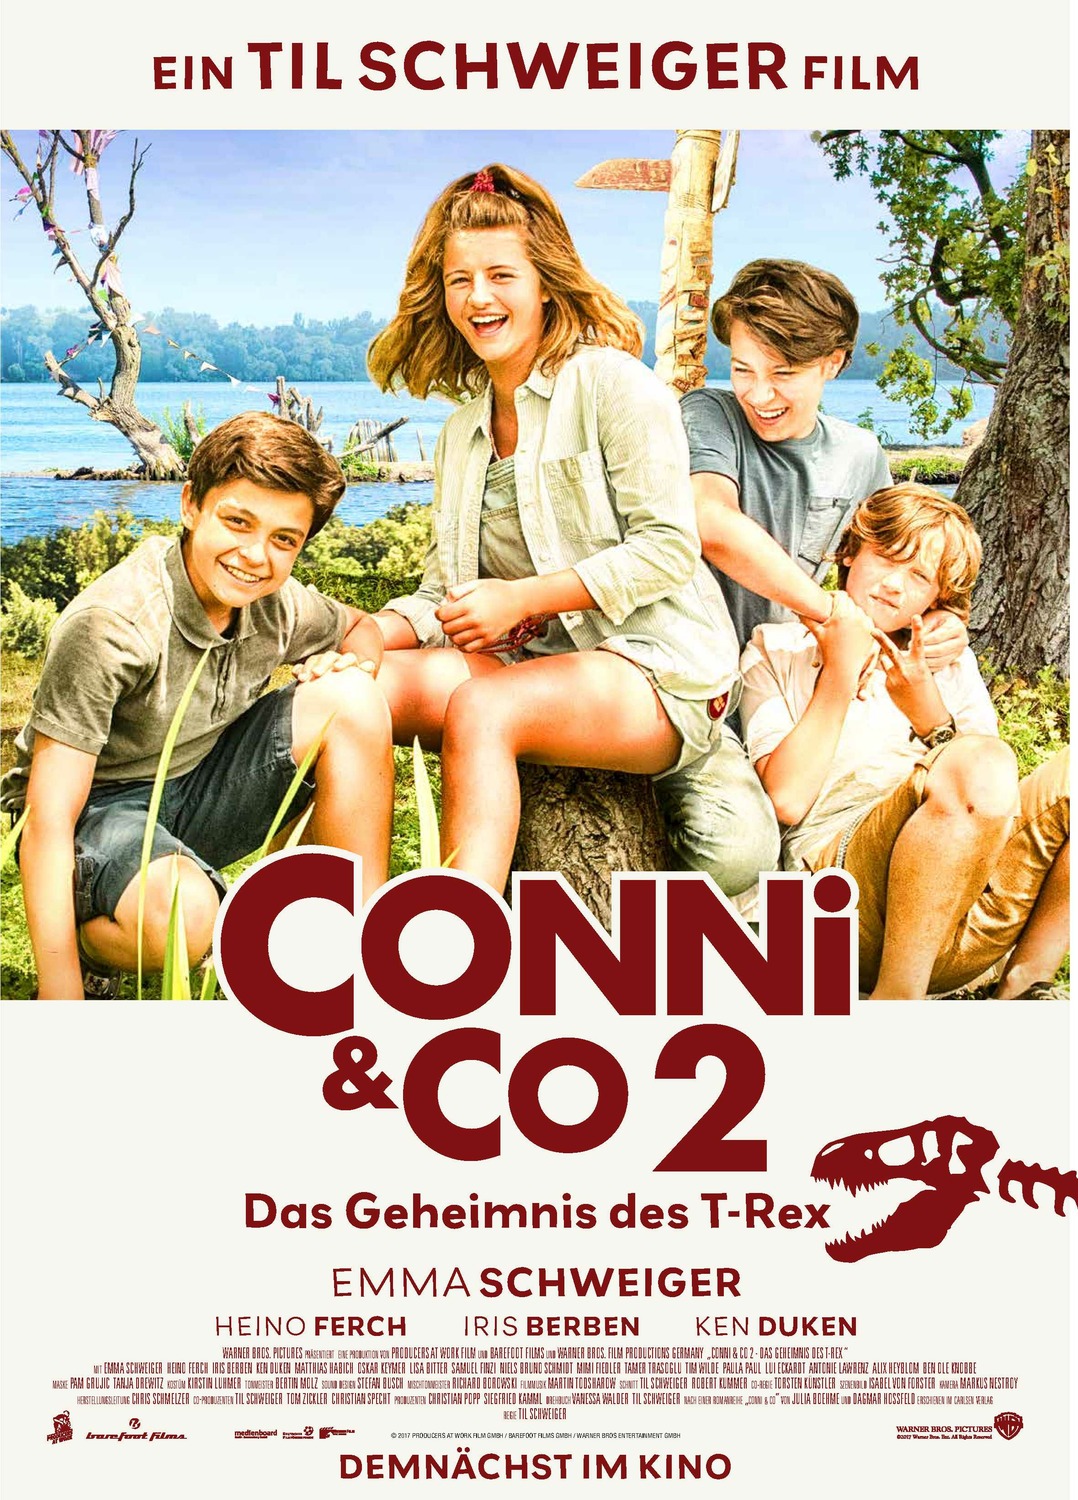 Extra Large Movie Poster Image for Conni und Co 2 - Das Geheimnis des T-Rex 